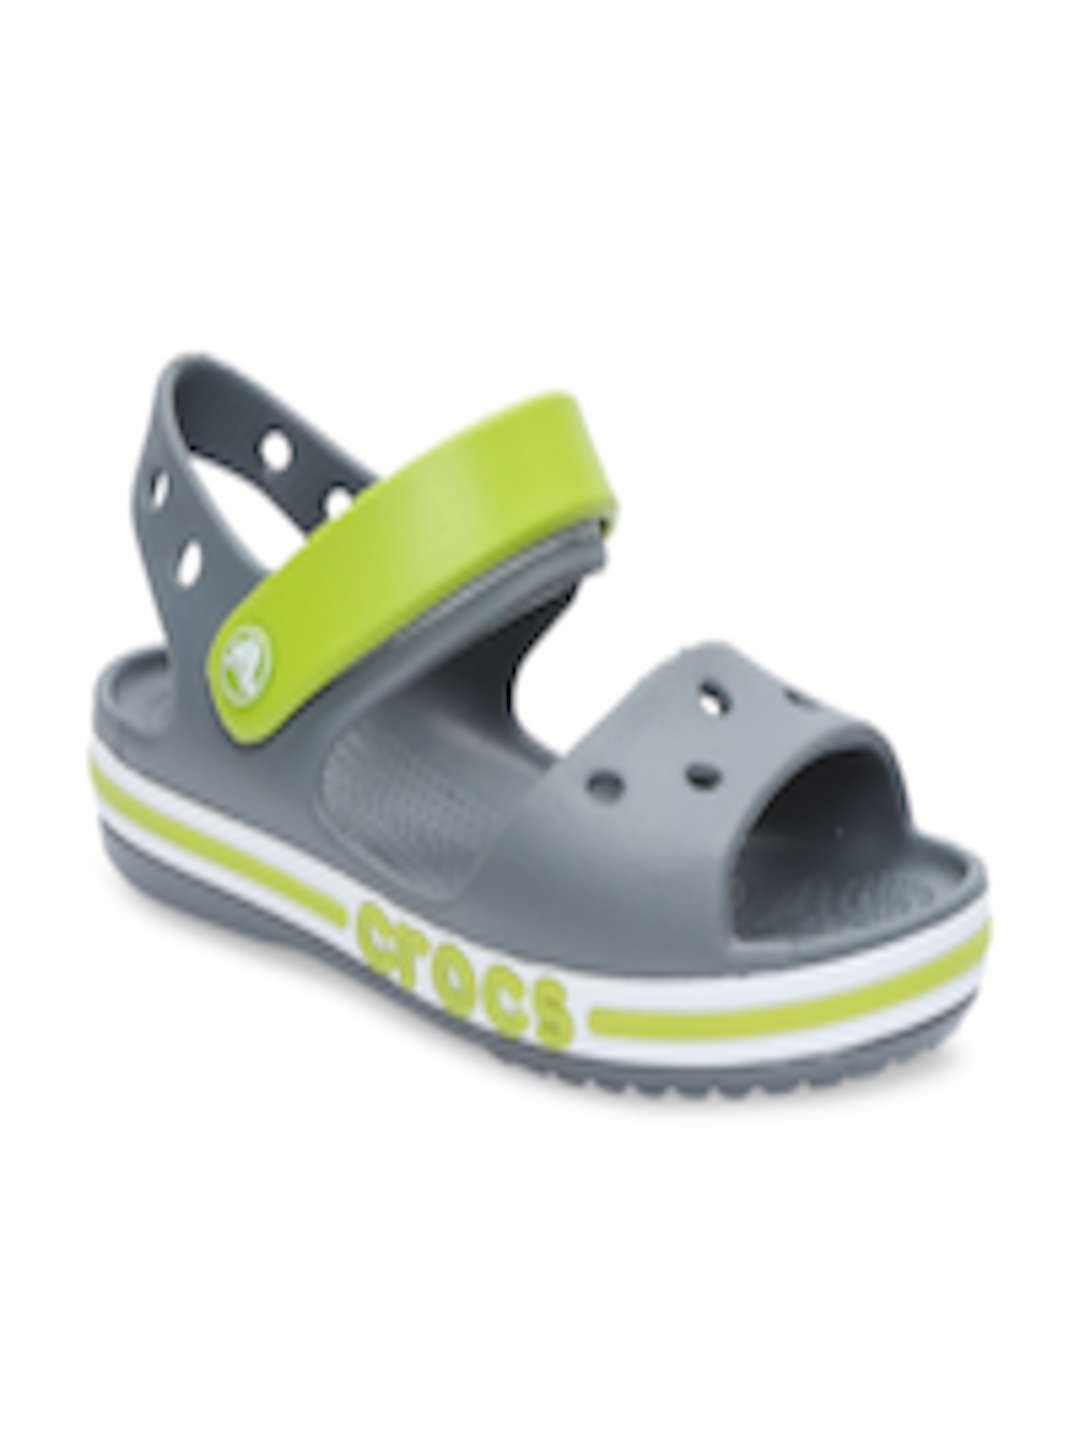 Buy Crocs  Boys  Grey Green Comfort Sandals  Sandals  for 